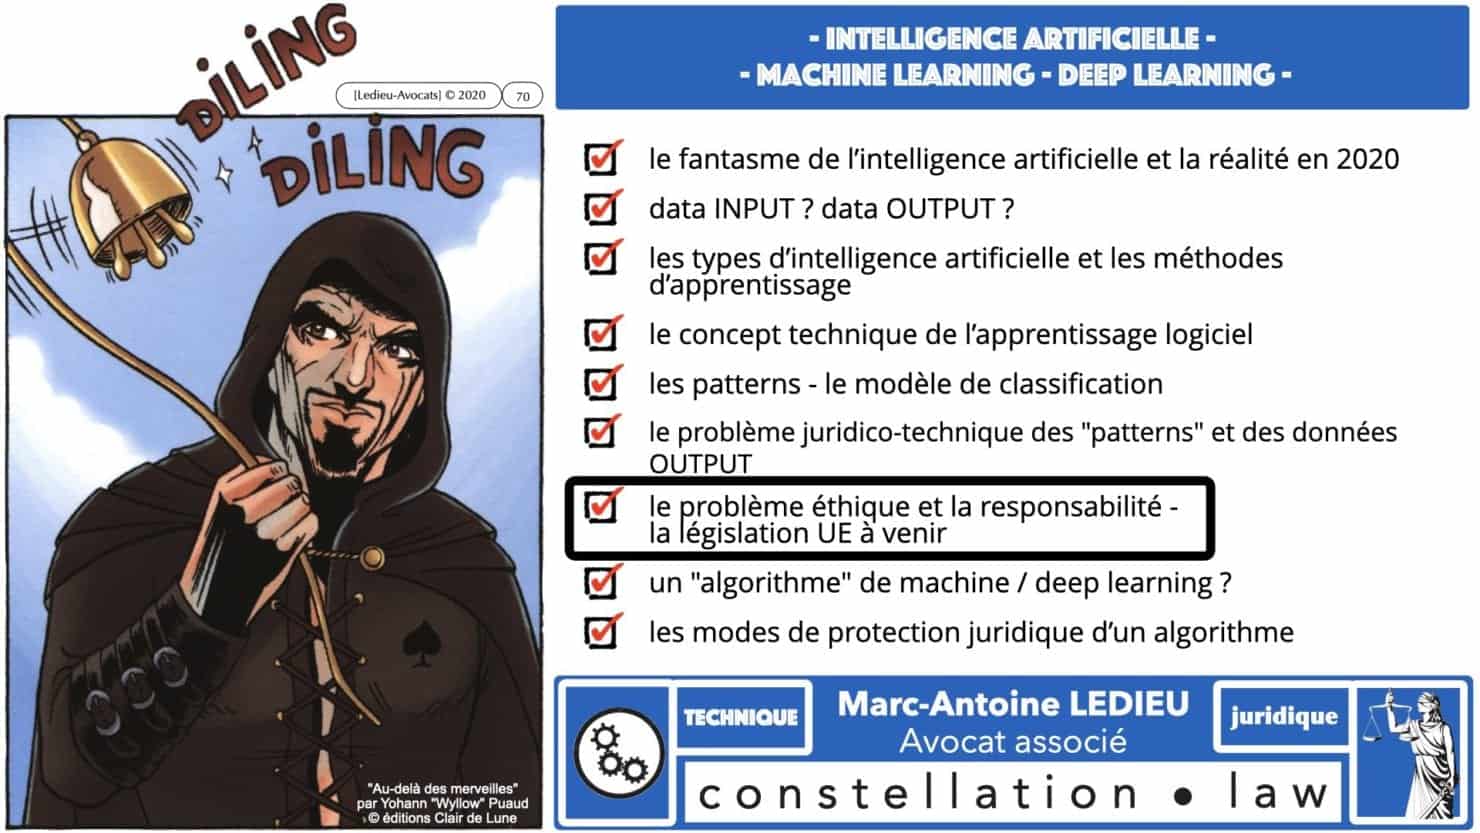 307 Intelligence artificielle-machine-learning-deep-learning-base de données-BIG-DATA *16:9* Constellation ©Ledieu-Avocat-13-10-2020.070